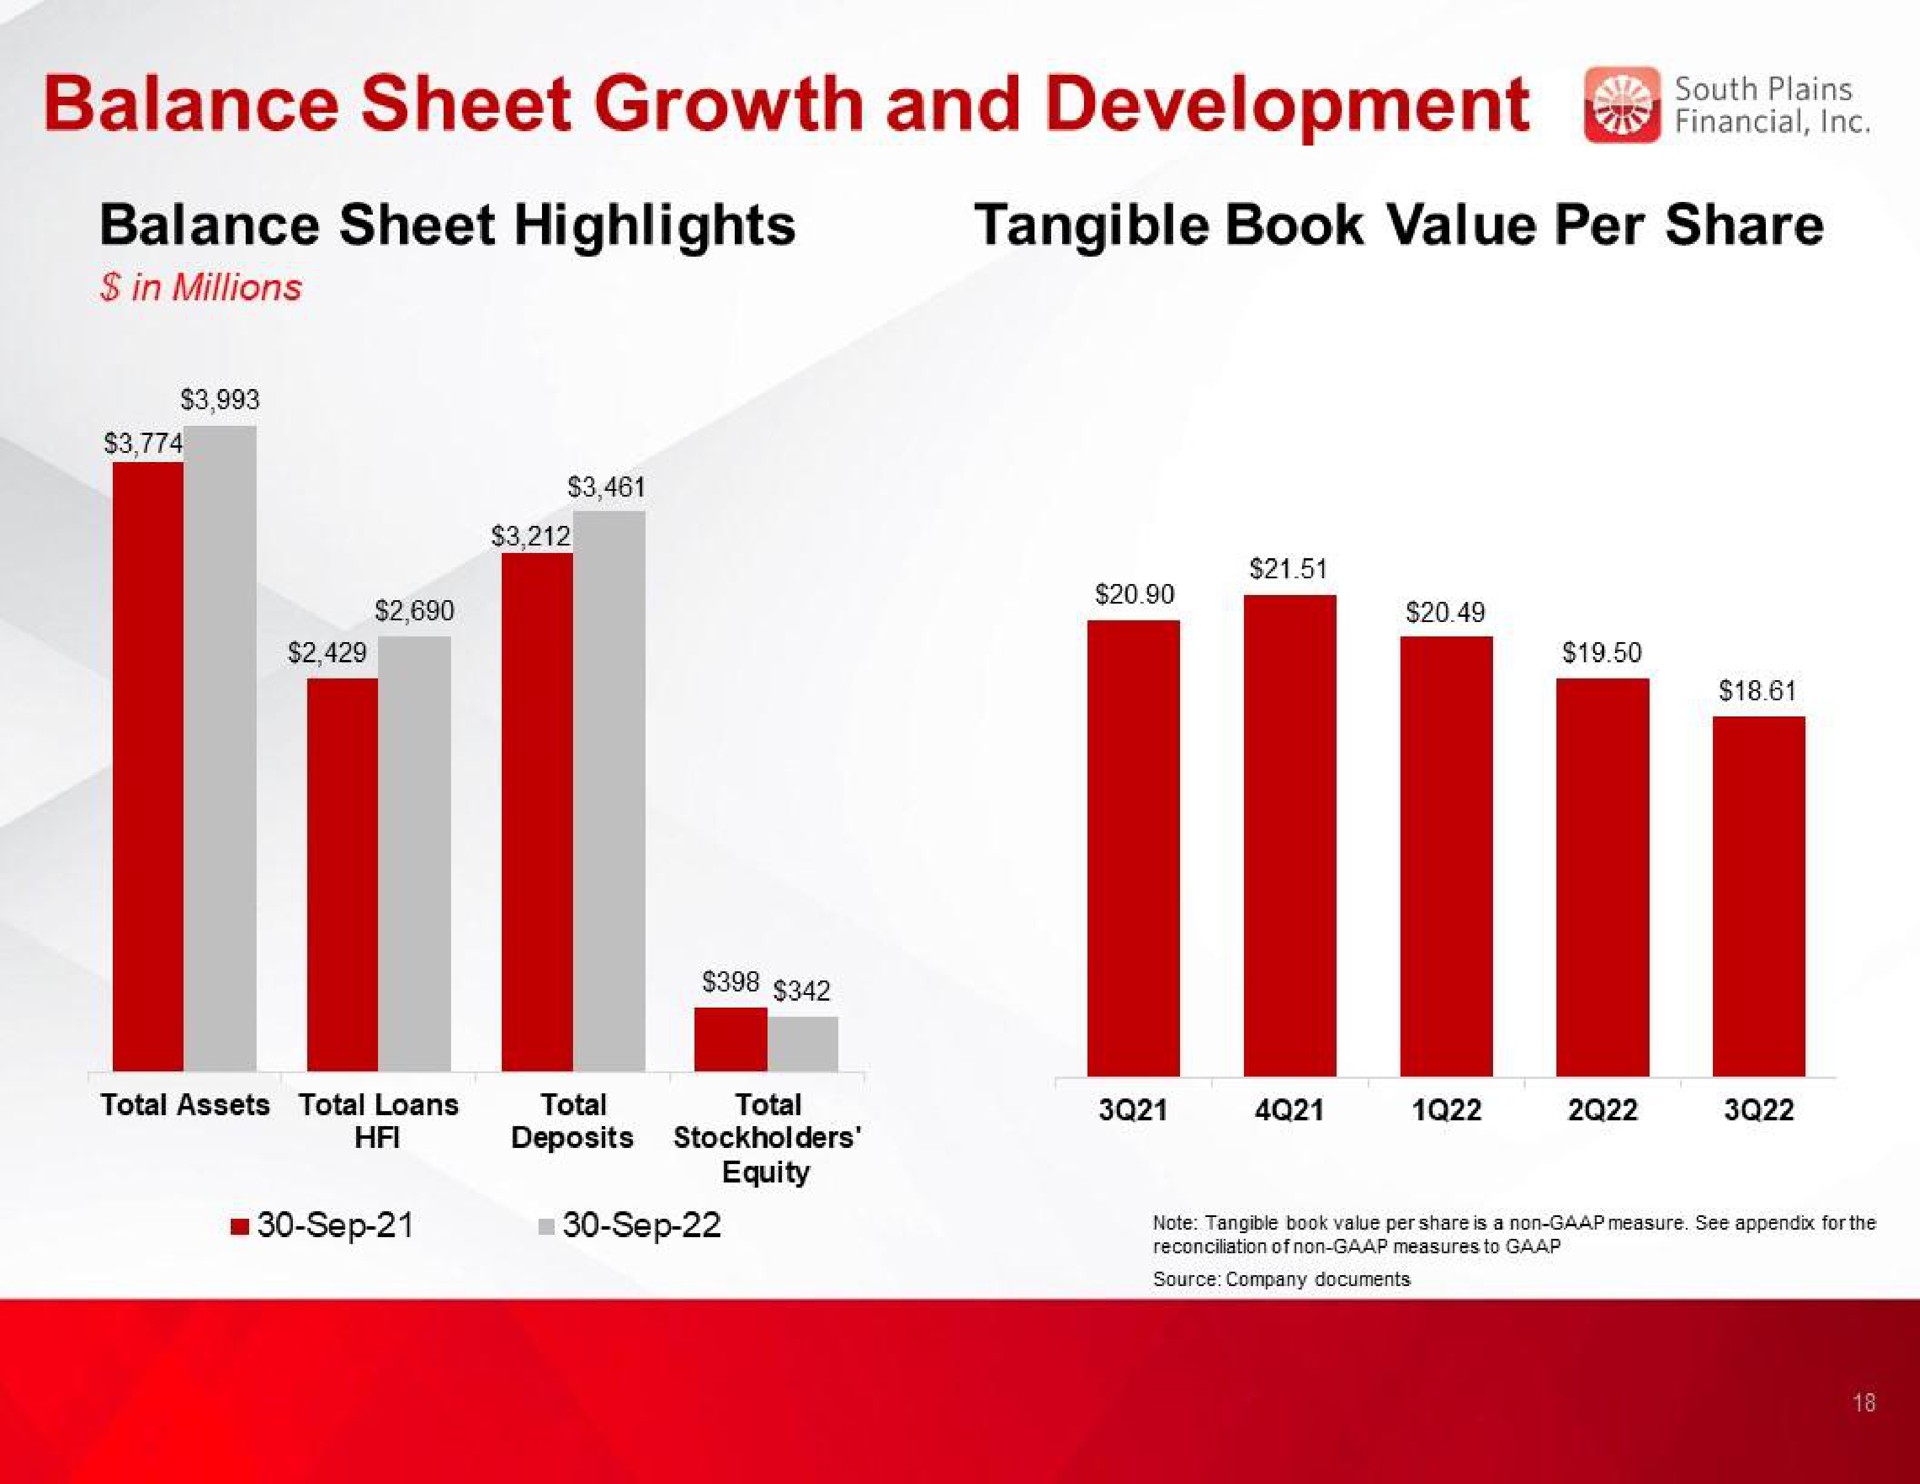 balance sheet growth and development ann balance sheet highlights tangible book value per share | South Plains Financial